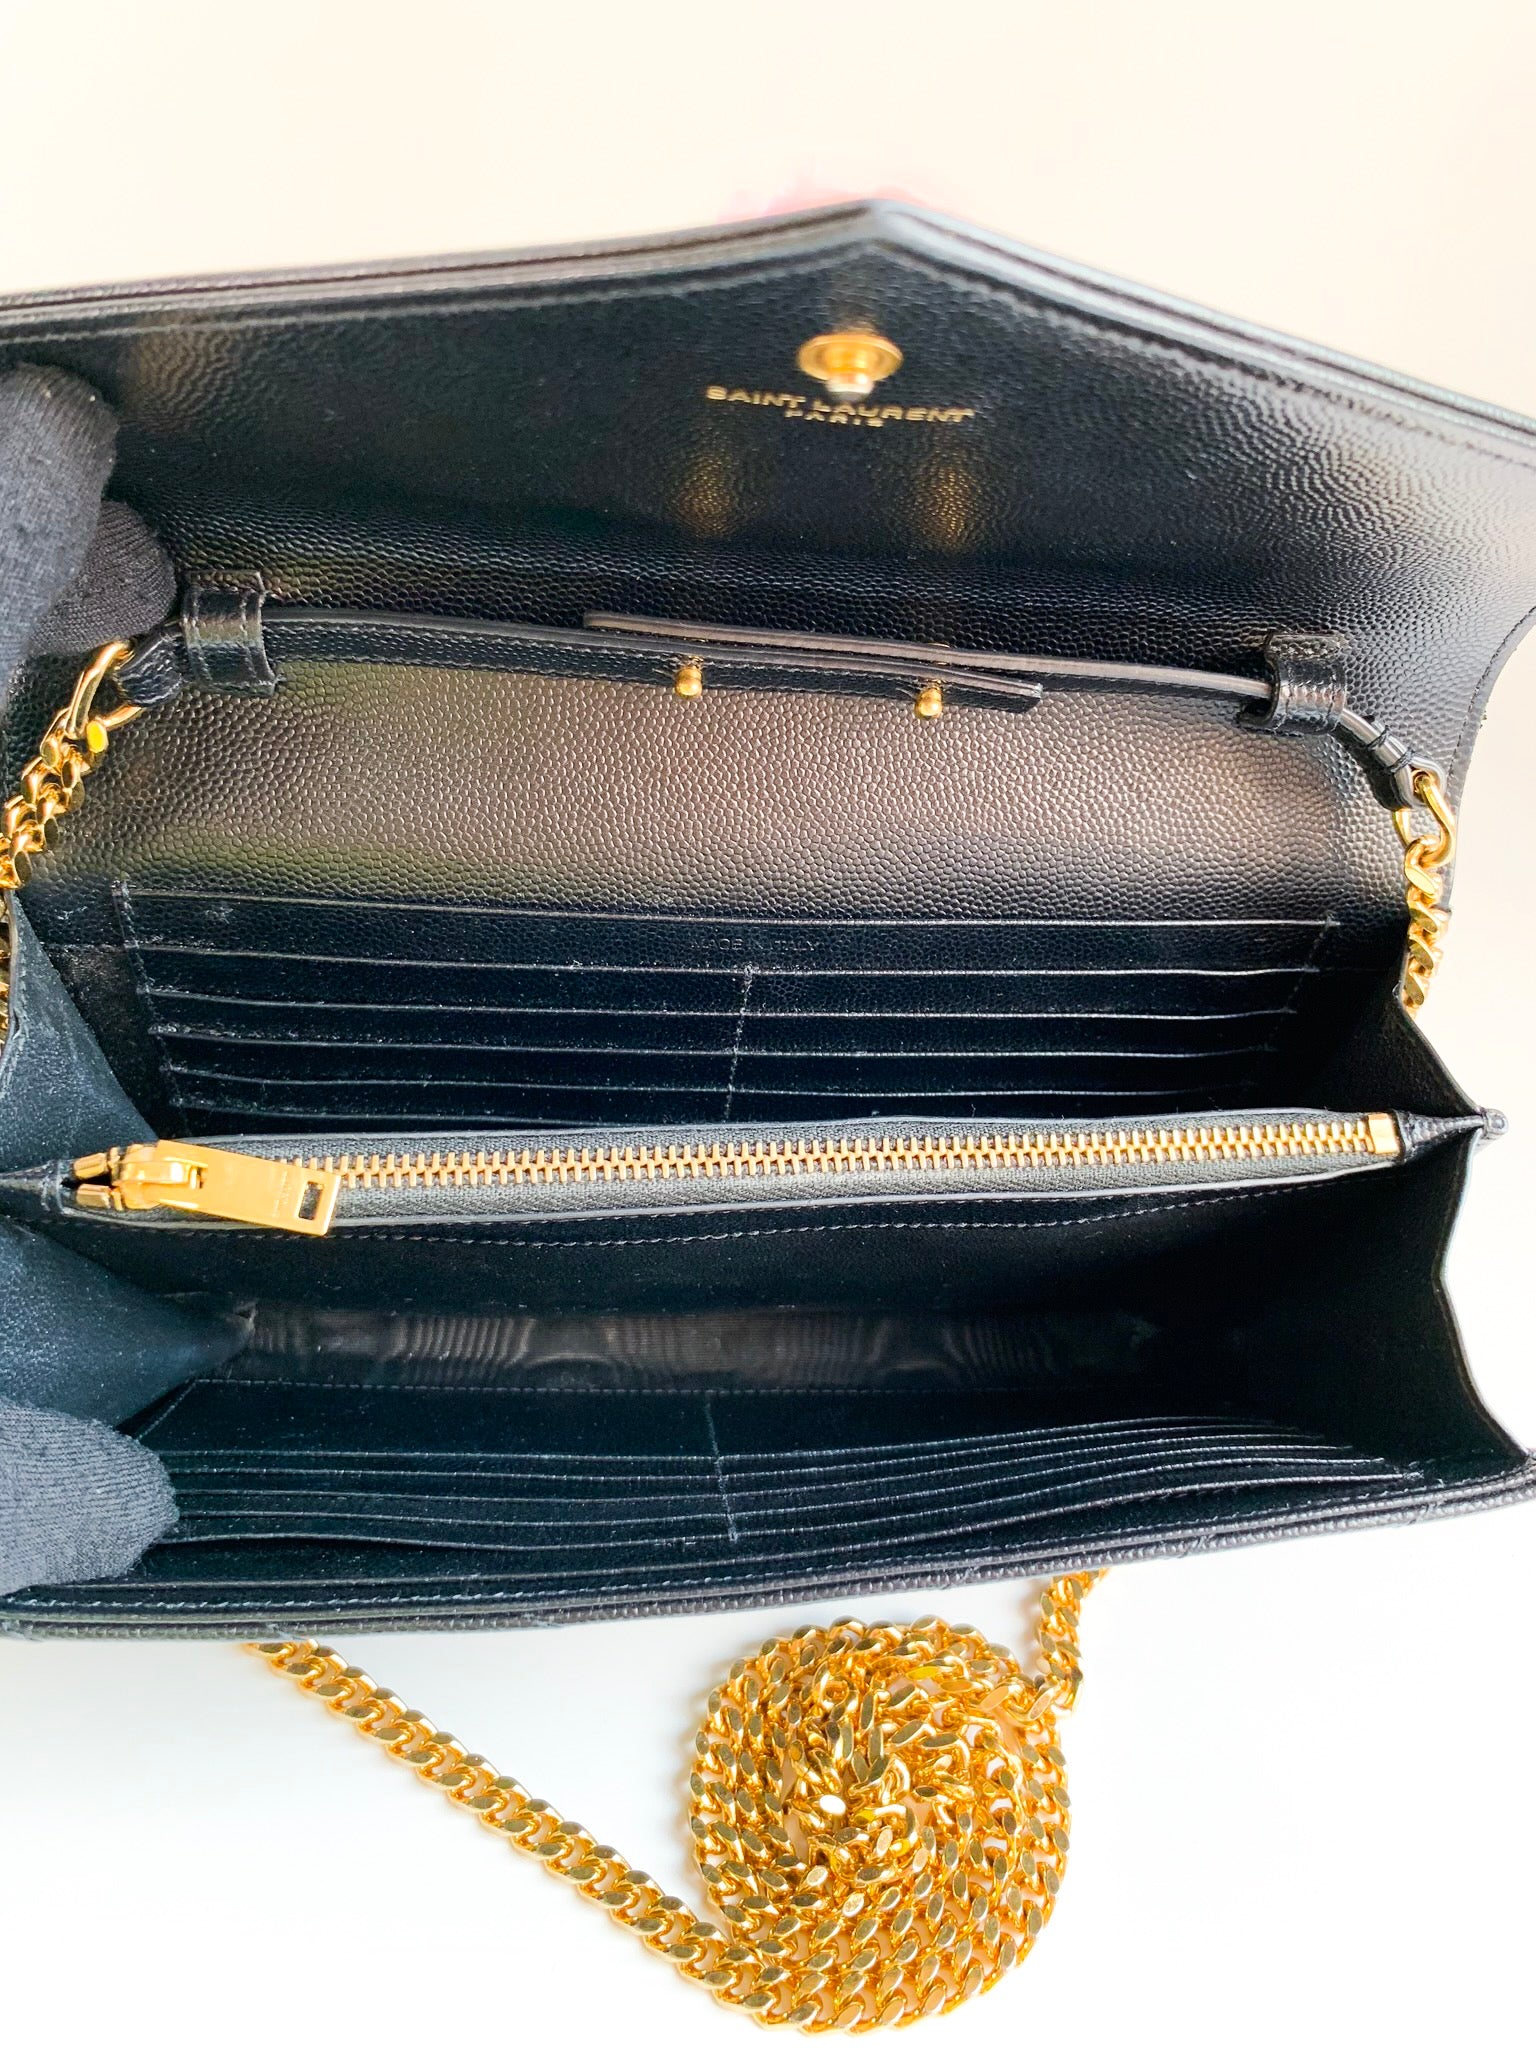 Ysl saint laurent wallet on chain authentic black gold hardware